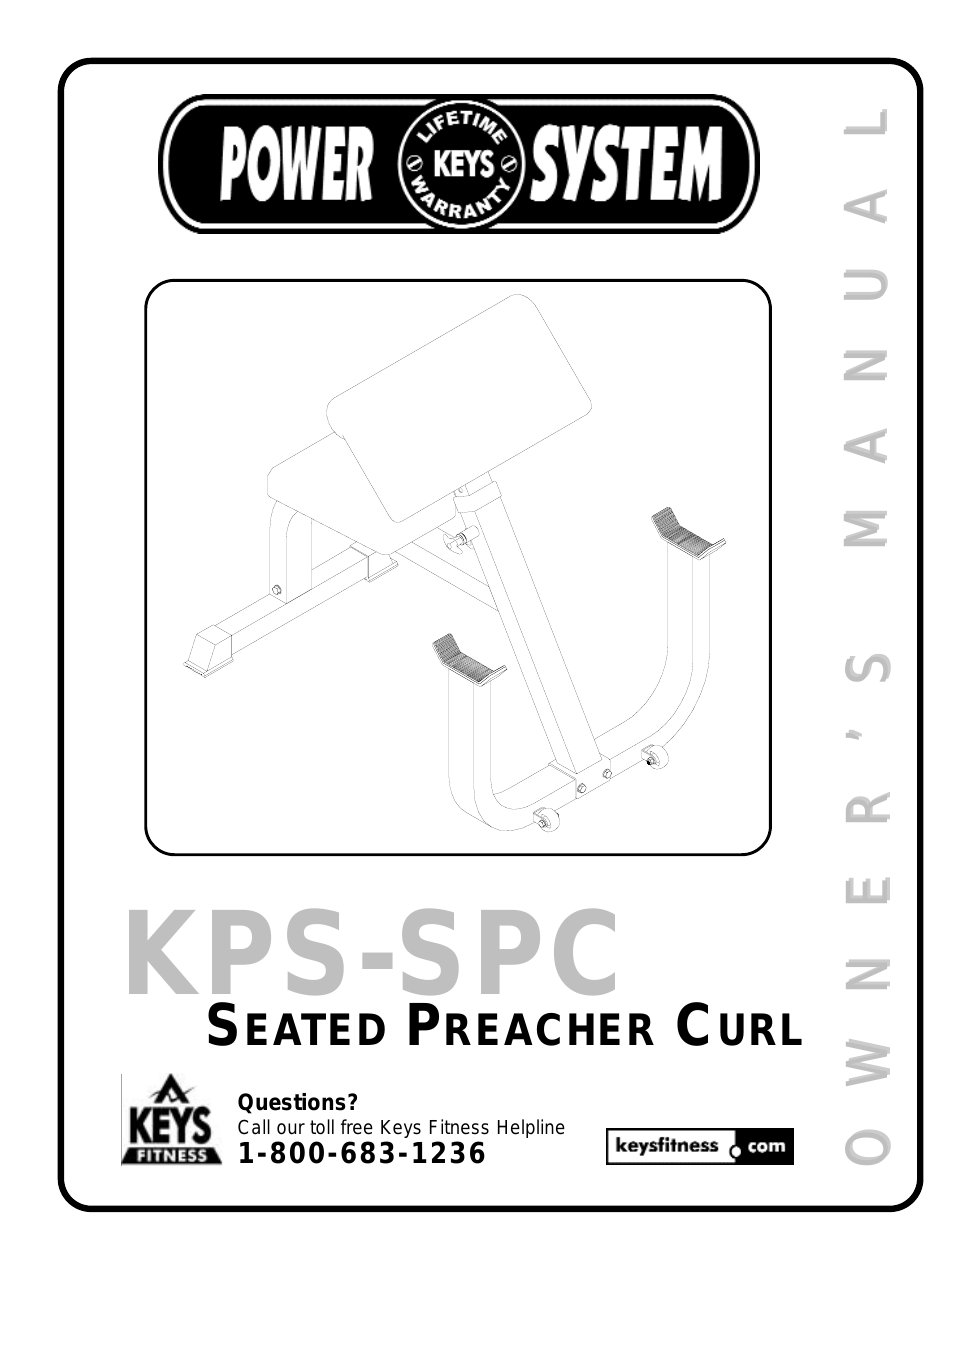 Seated Preacher Curl KPS-SPC